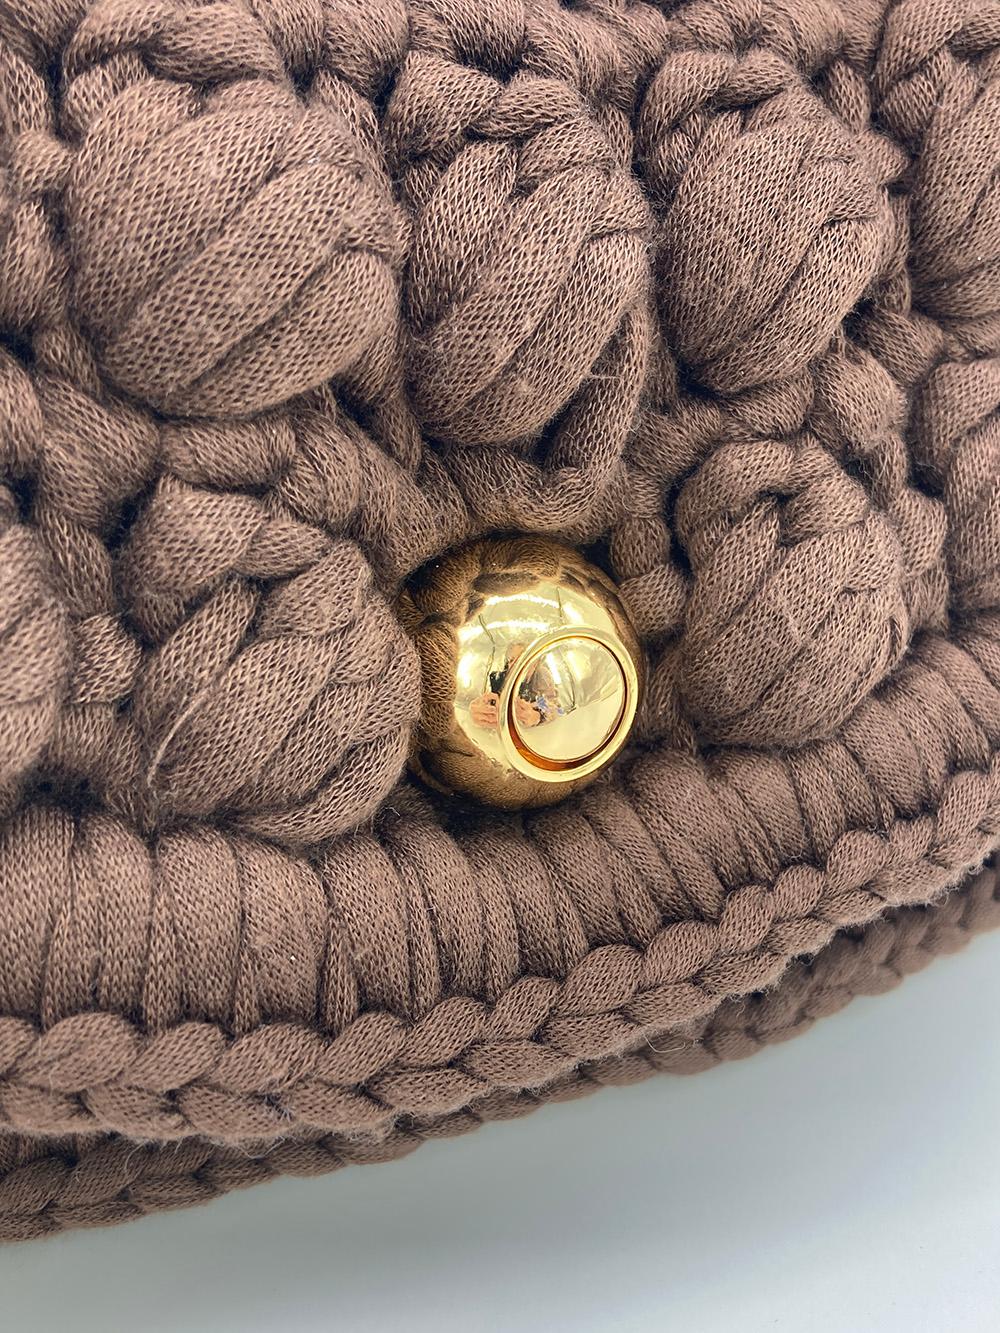 brown crochet bag